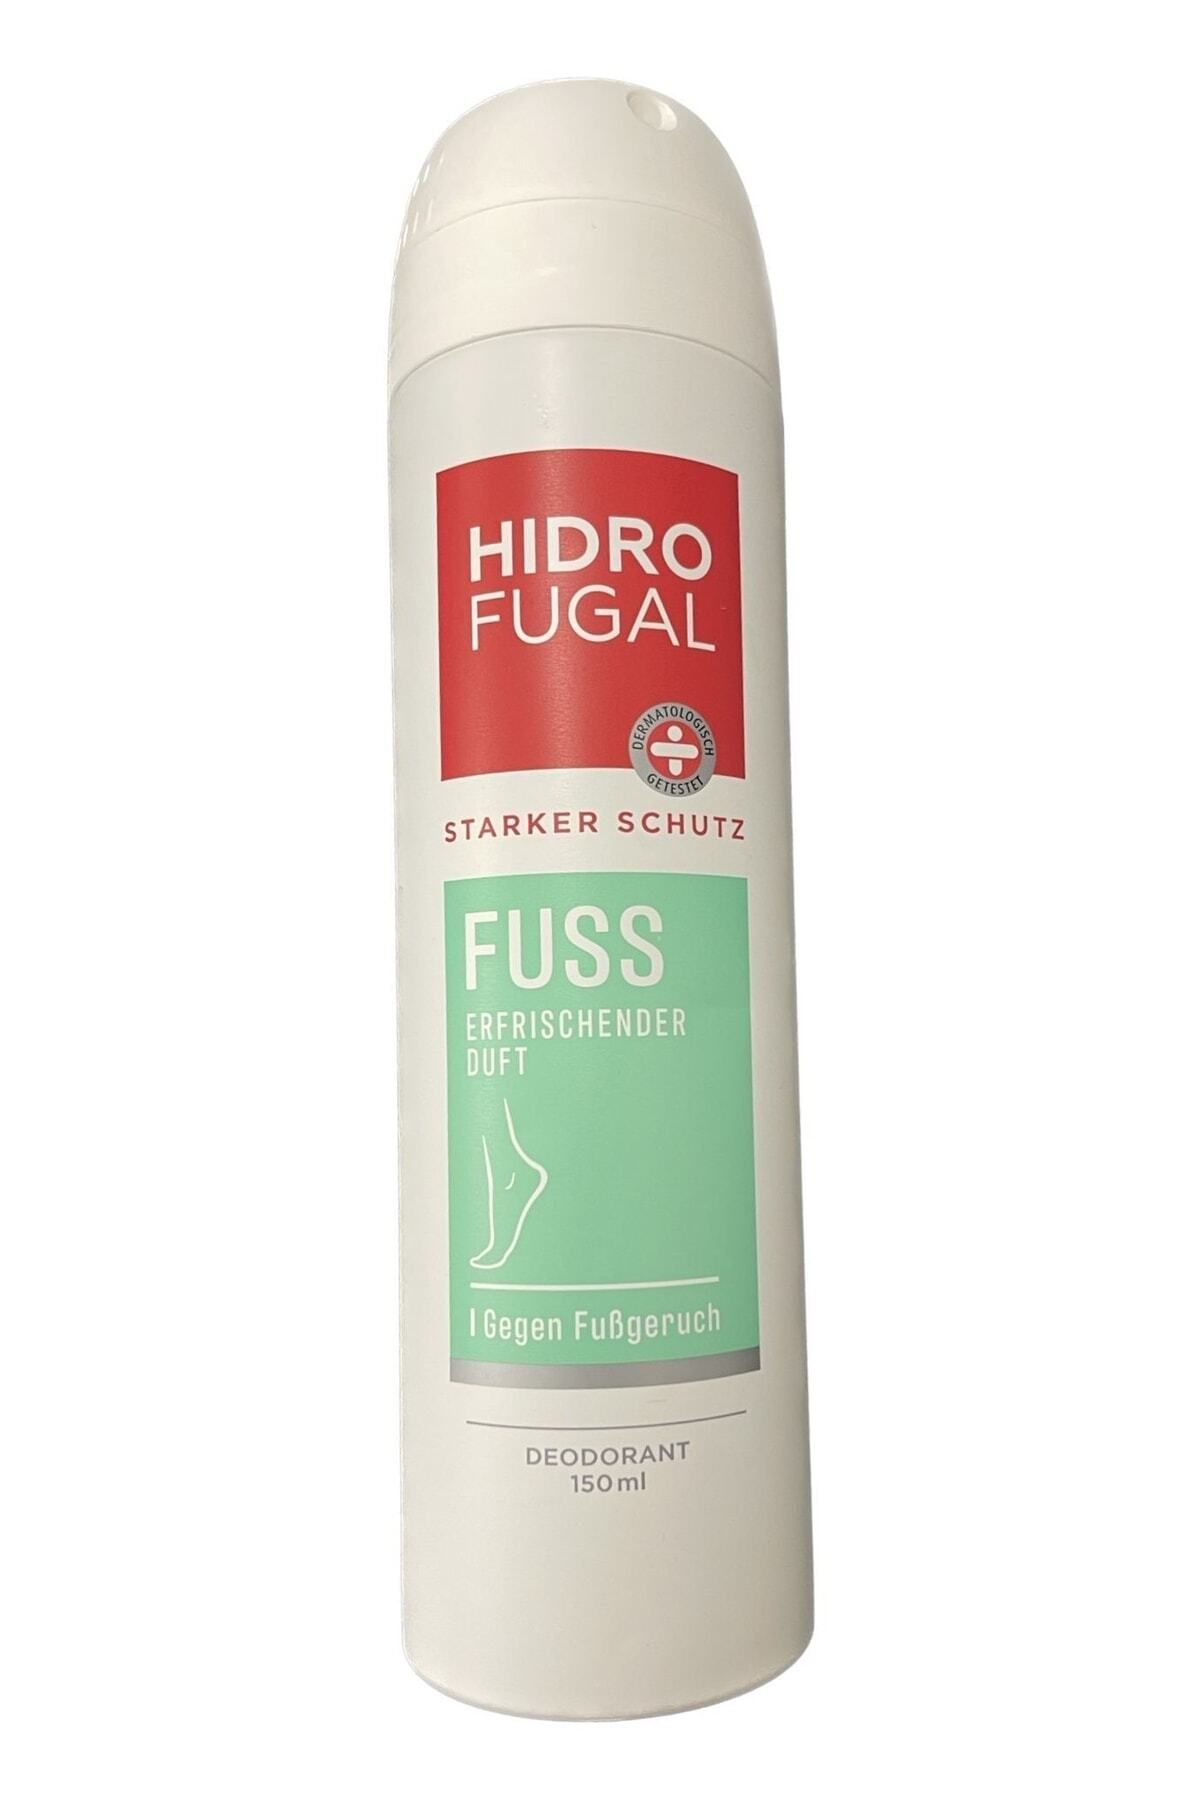 Hidro Fugal Hidrofugal Fuss Sprey Deodorant 150 Ml